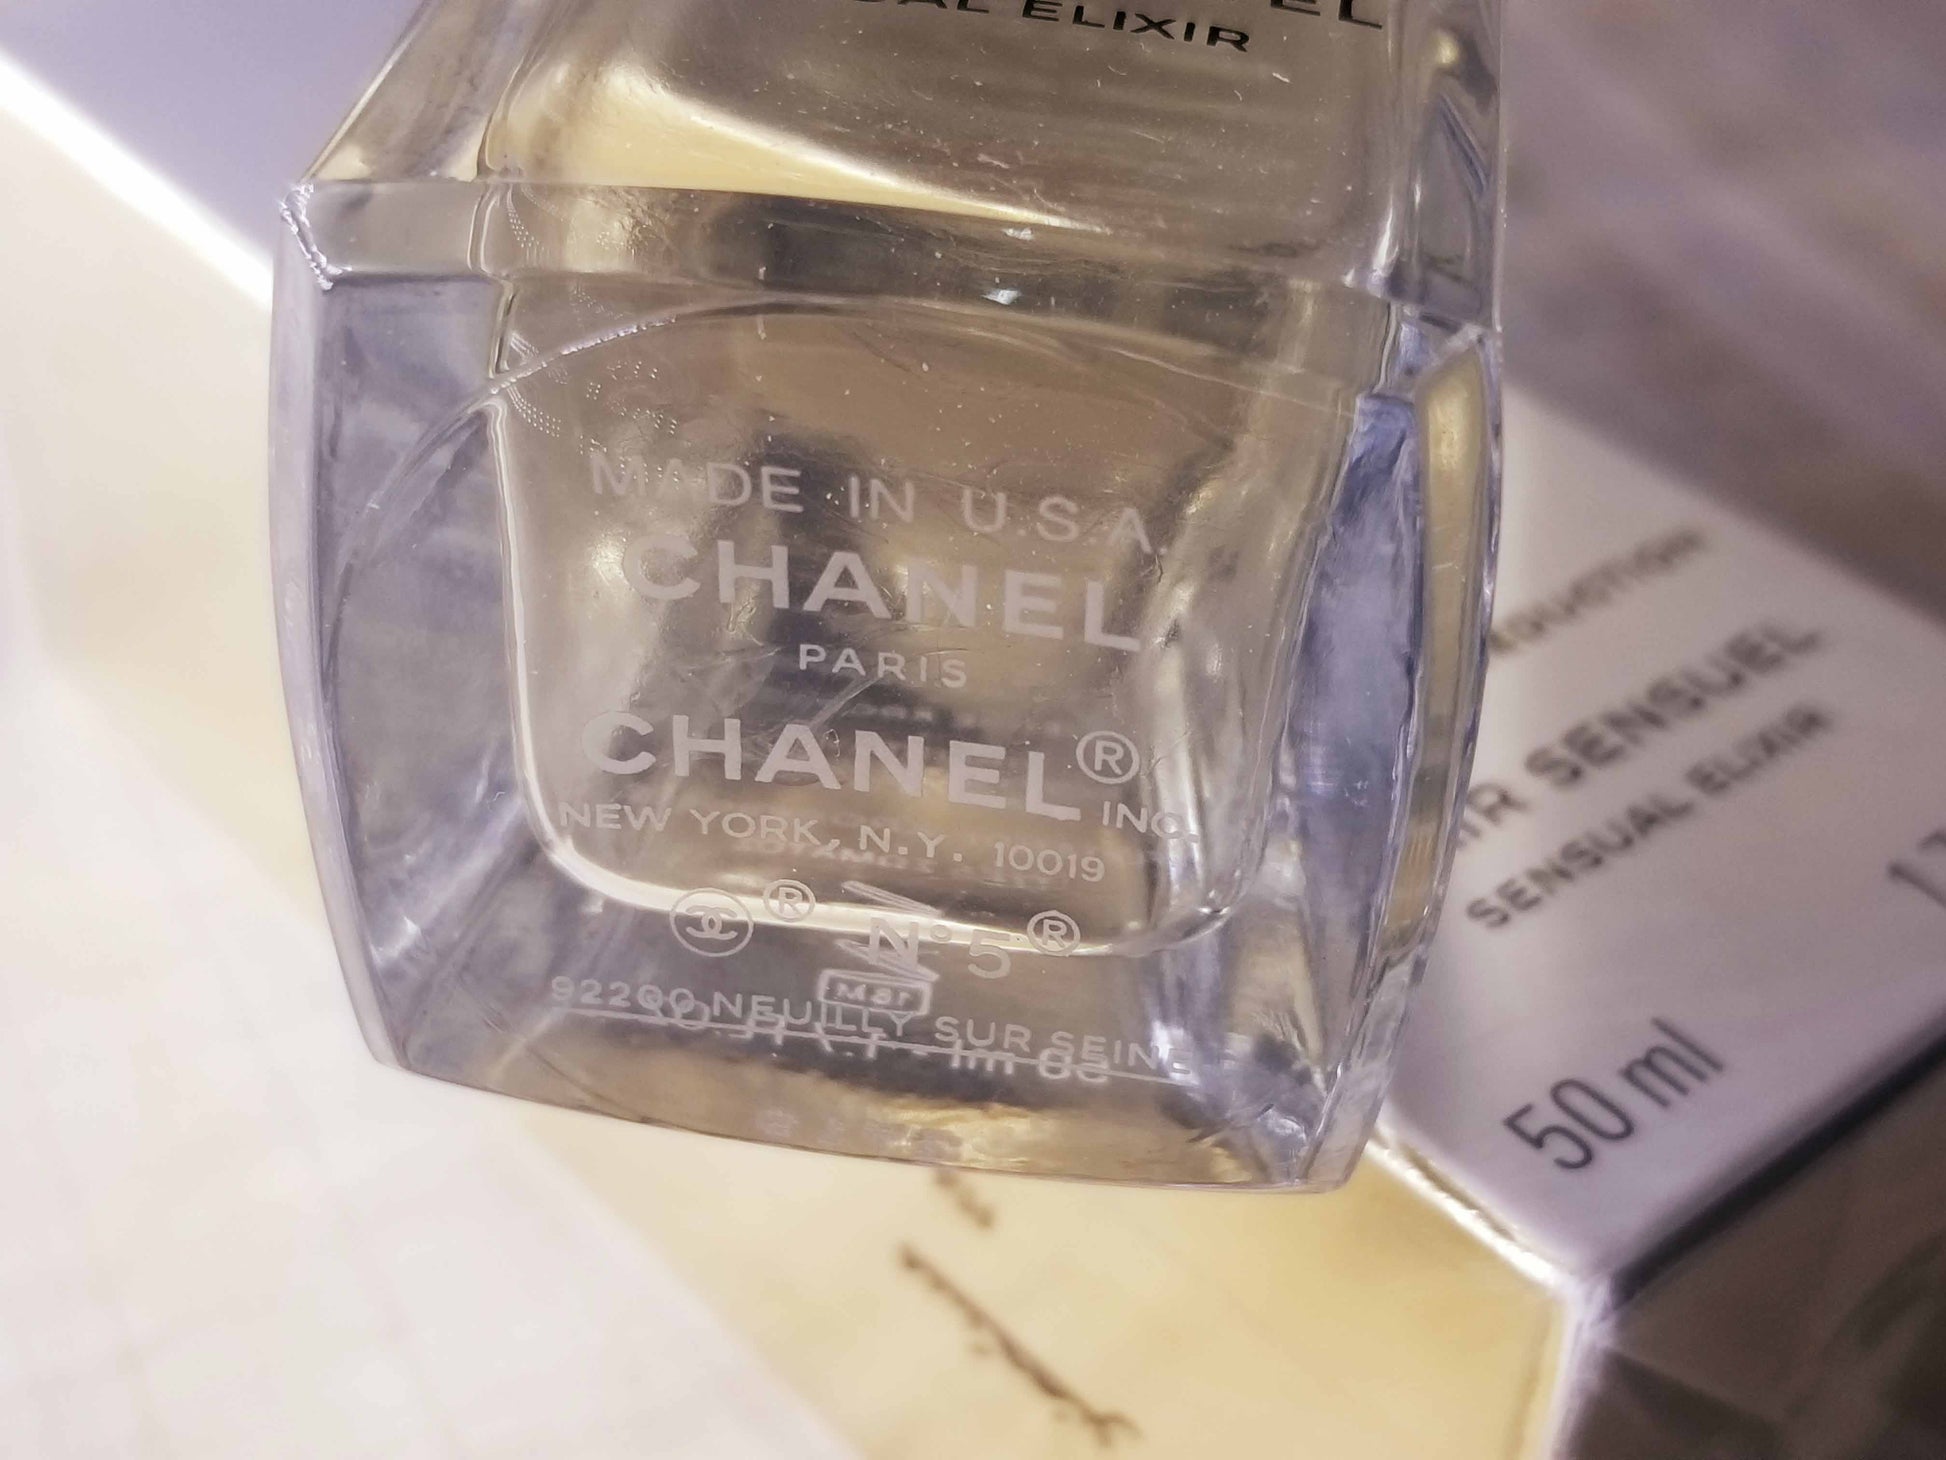 Tal til geni Kan ikke læse eller skrive Chanel N5 Elixir Sensuel for women Fluid Body Gel 50 ml 1.7 oz, Vintag –  Perfumani